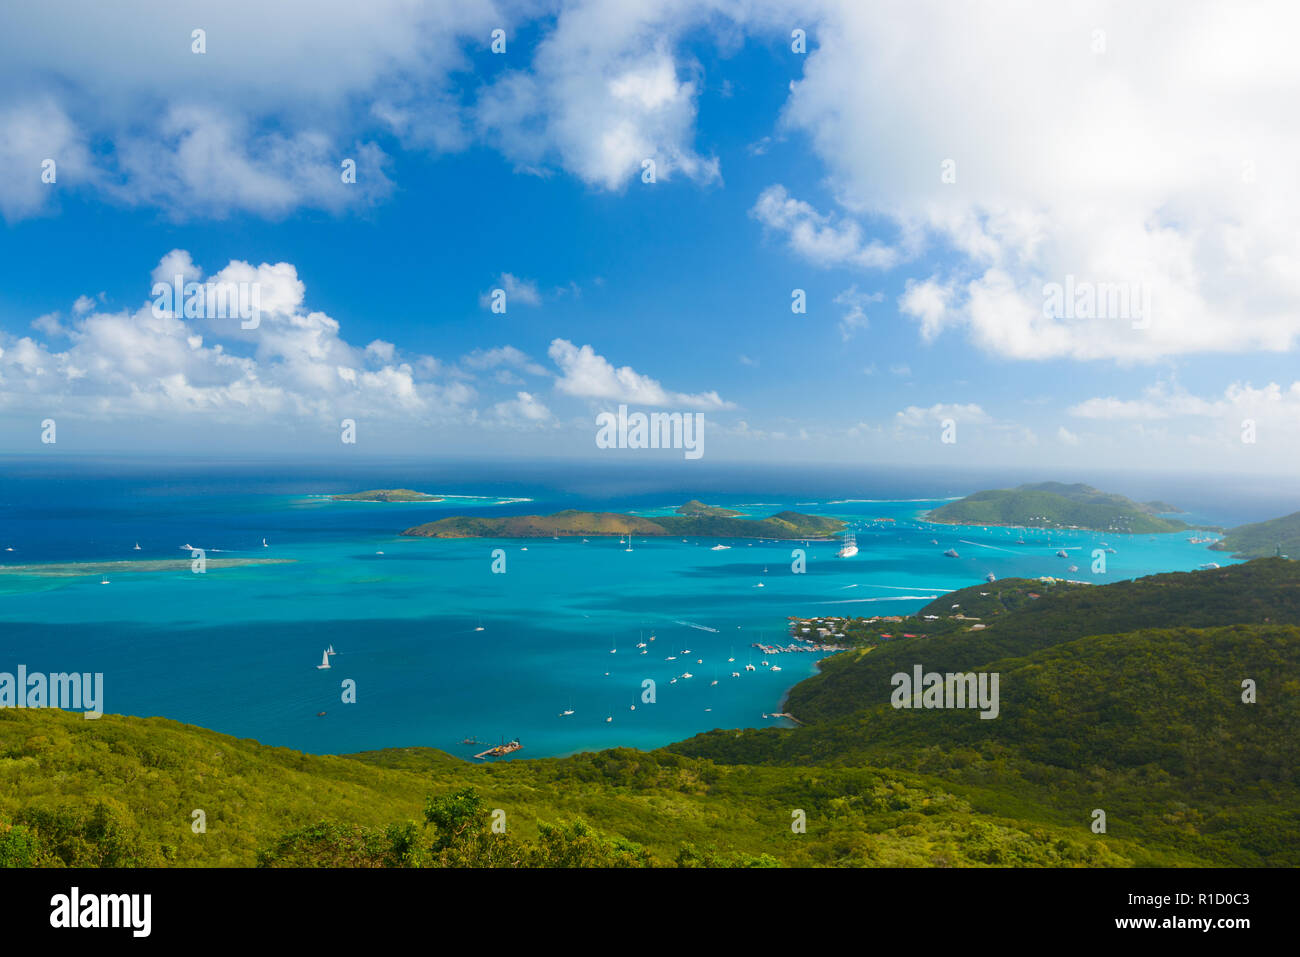 Virgin Gorda in the British Virgin Islands of the Carribean. Stock Photo